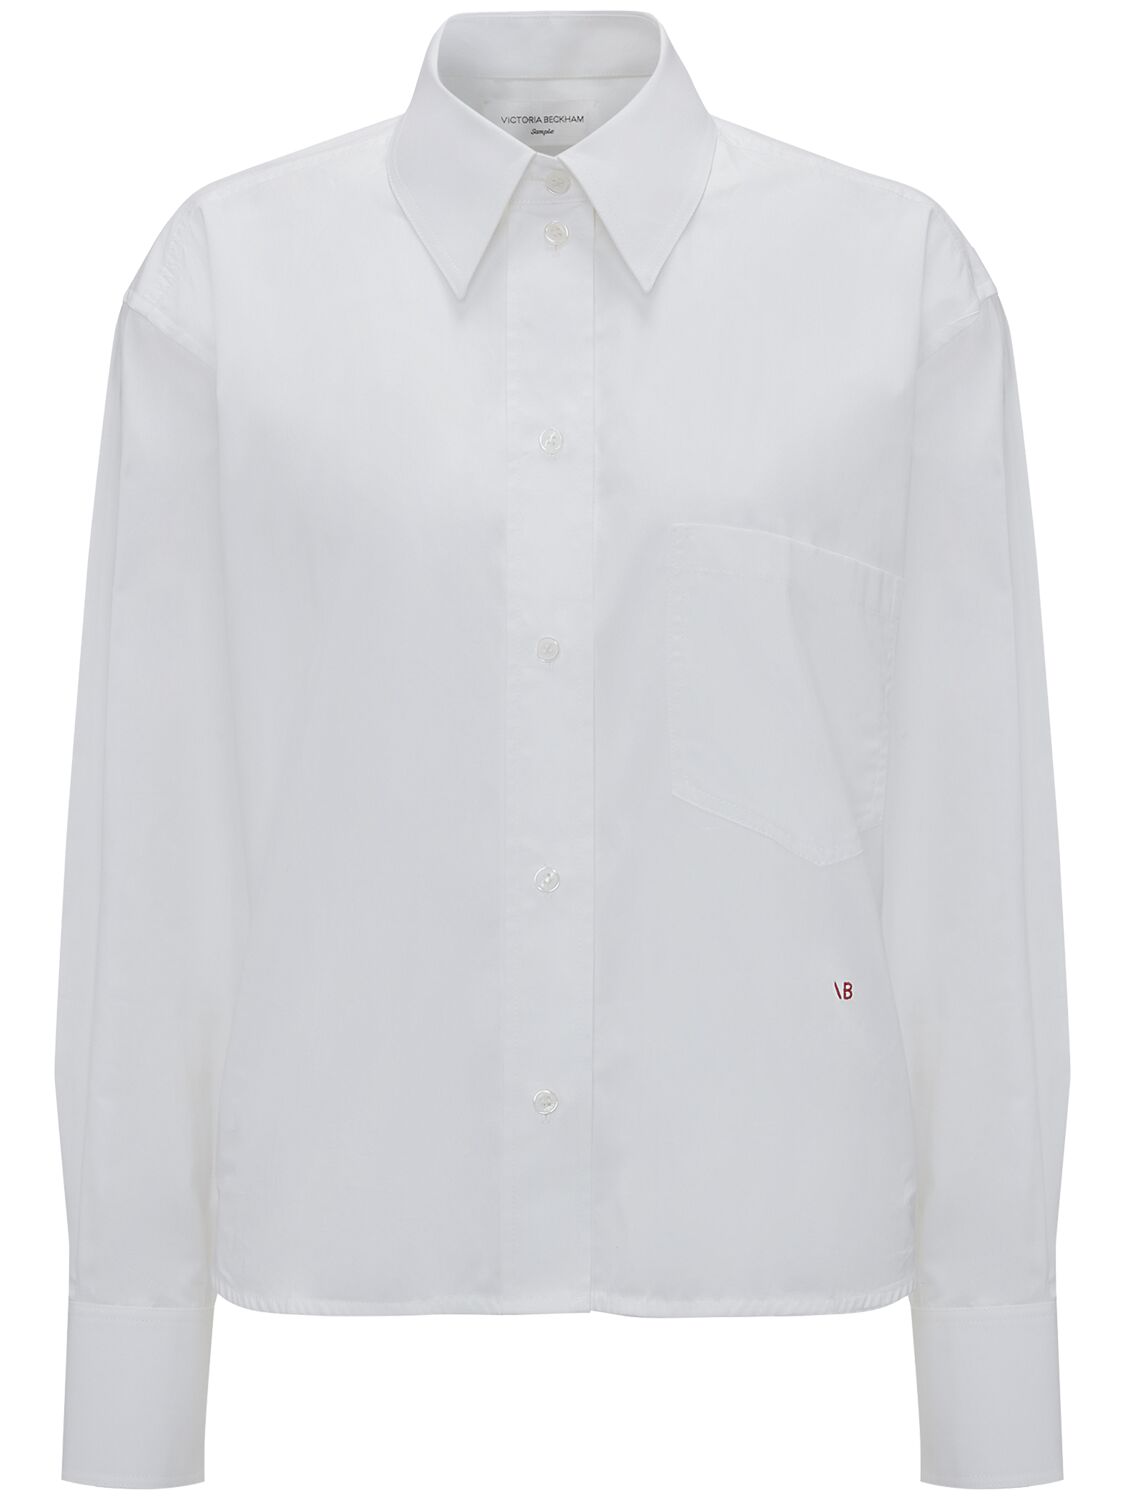 Image of Mens Oversize Cotton Poplin Shirt